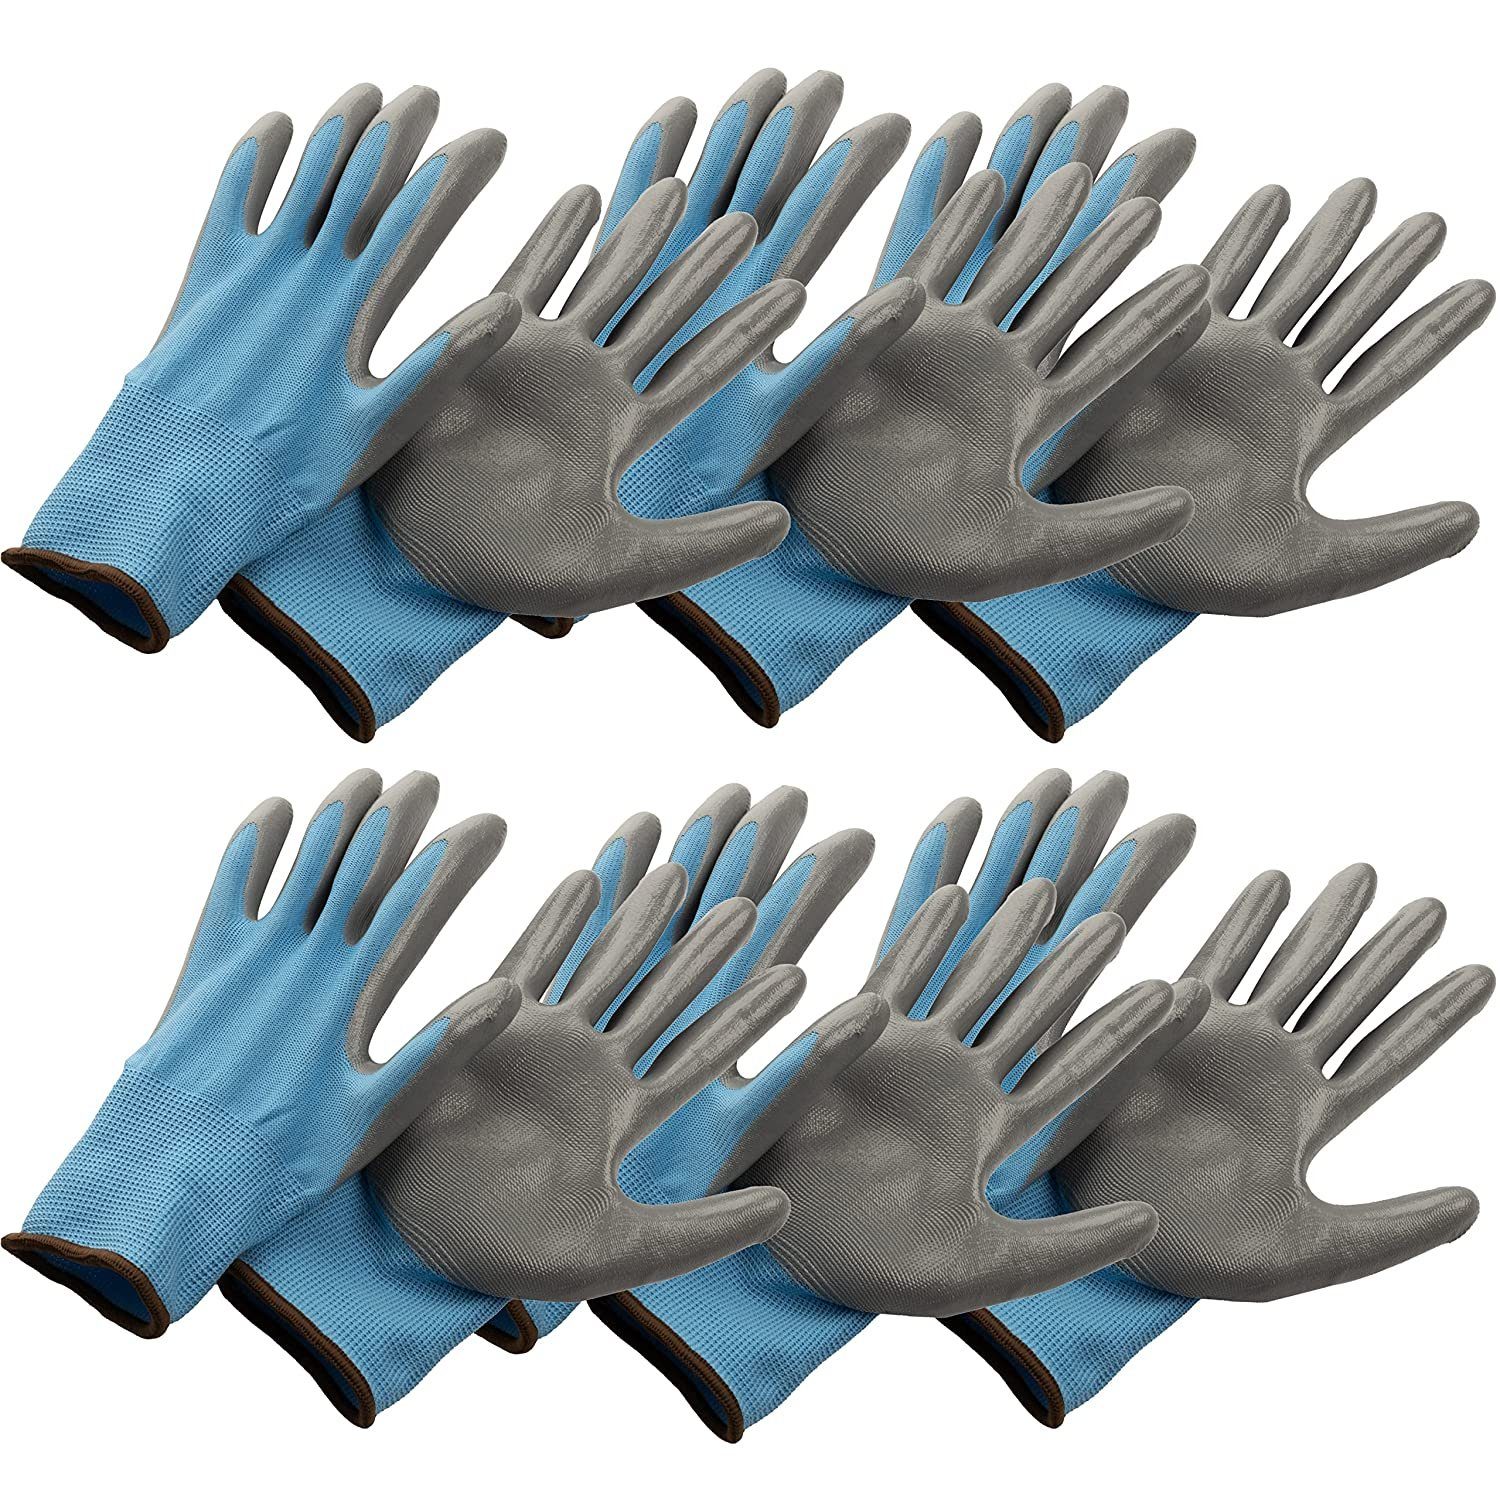 Centi Gartenhandschuhe 6 Arbeitshandschuhe Damen/Herren, Arbeitshandschuhe Gartenhandschuhe (Set, Größe 10, Blau) Montagehandschuhe Handschuhe Schutzhandschuhe